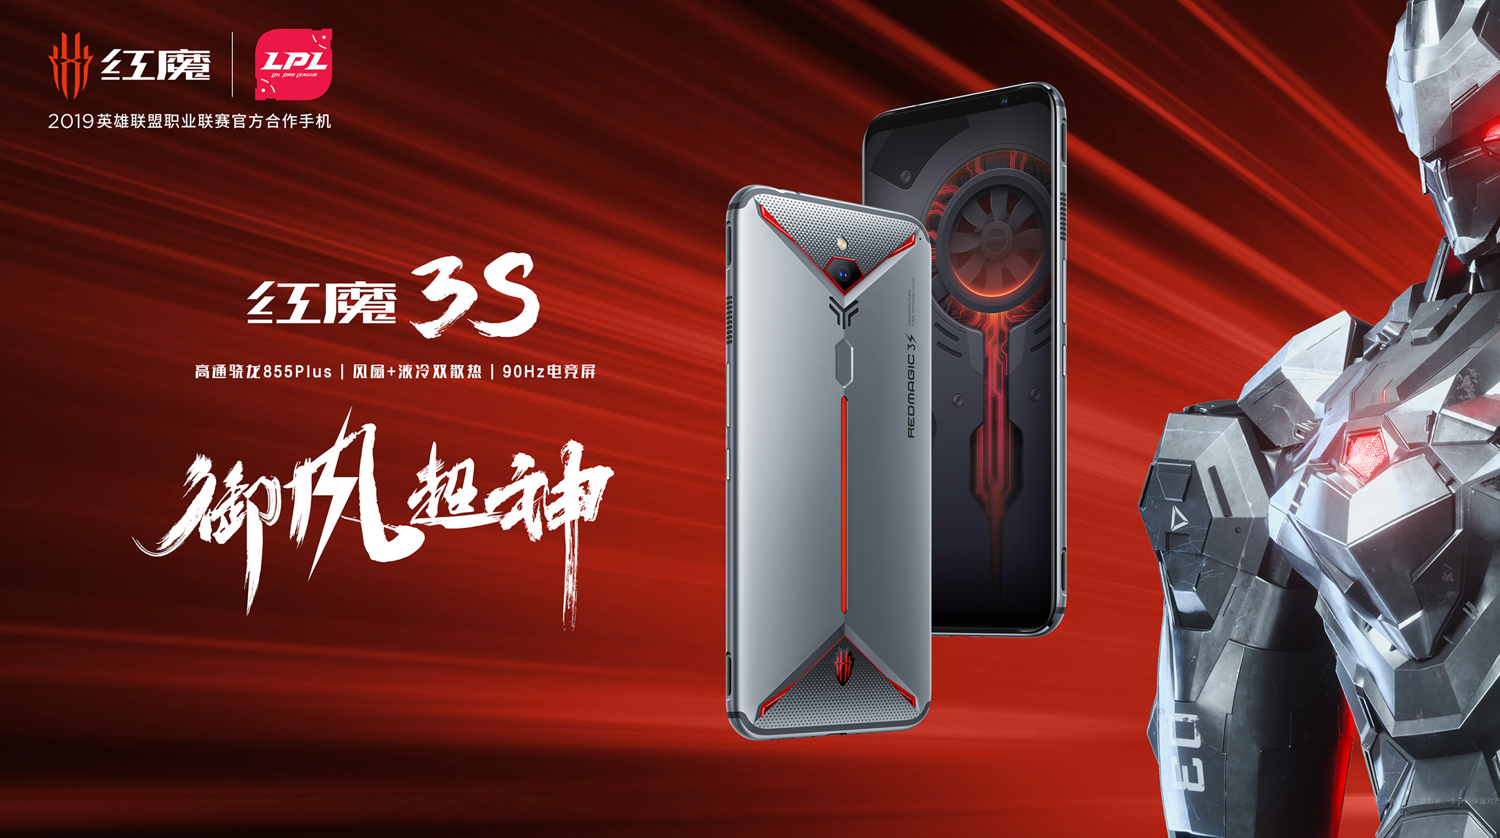 Nubia Red Magic 3S Kini Rasmi – Snapdragon 855+, Dwi-Sistem Penyejukan, Harga Sekitar RM1758